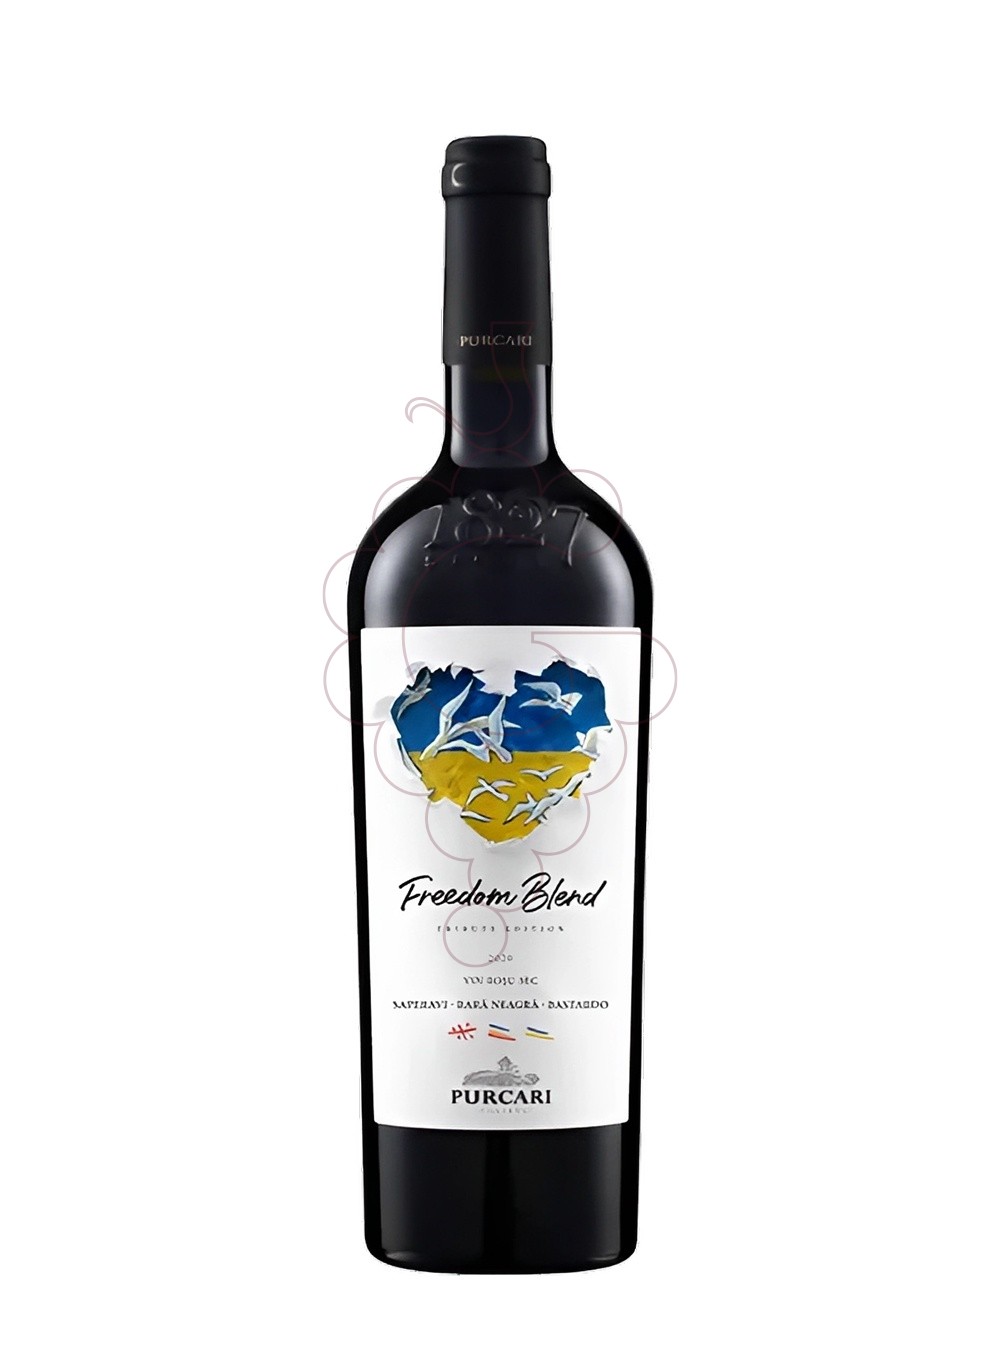 Photo Purcari Vinohora Freedom Blend red wine